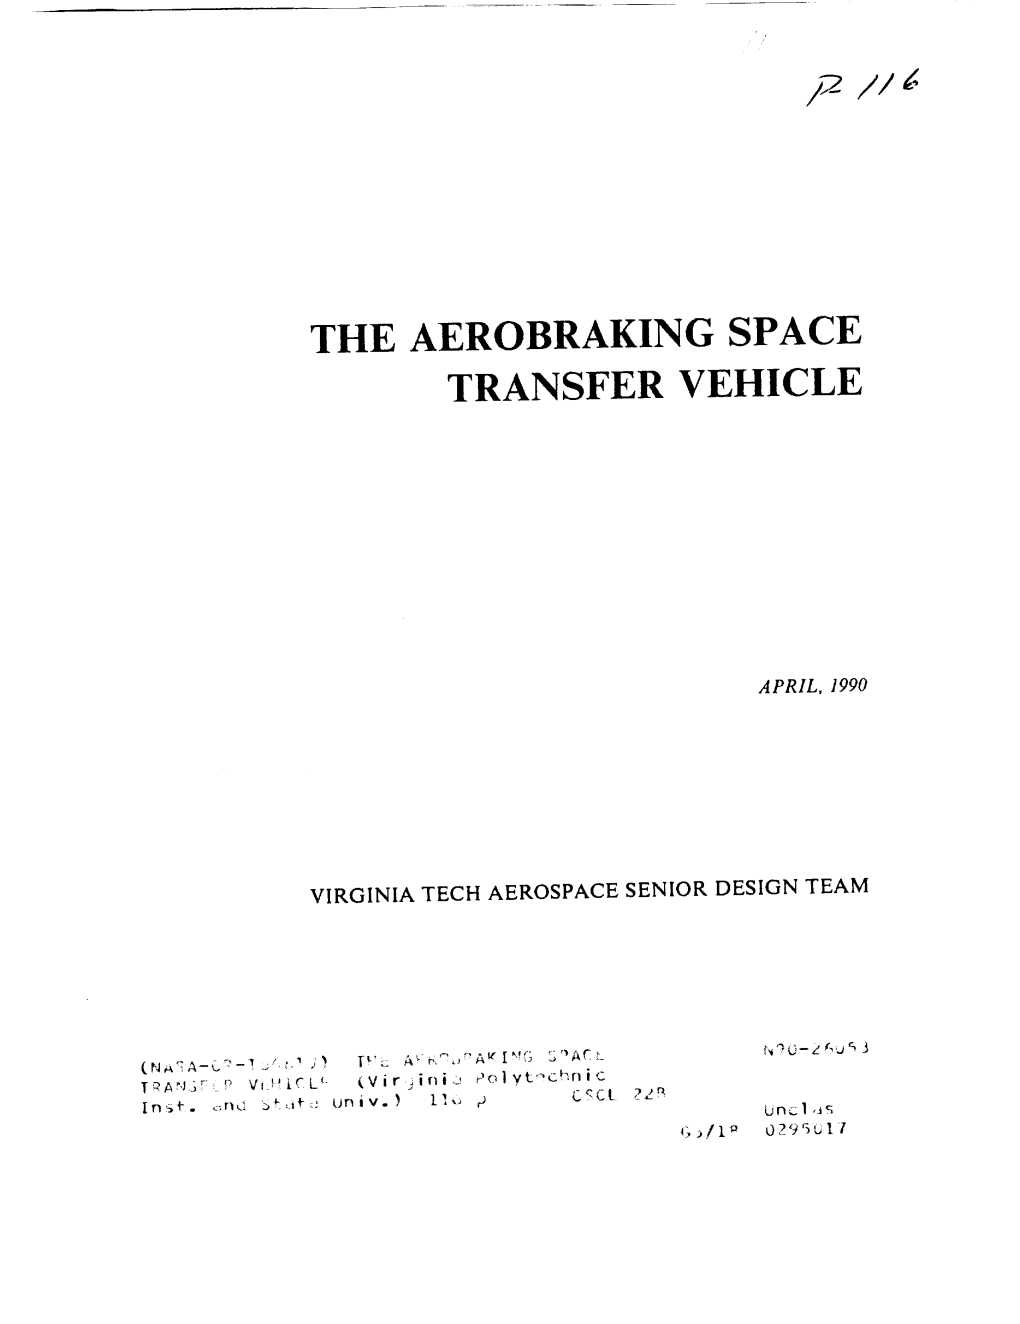 The Aerobraking Space Transfer Vehicle